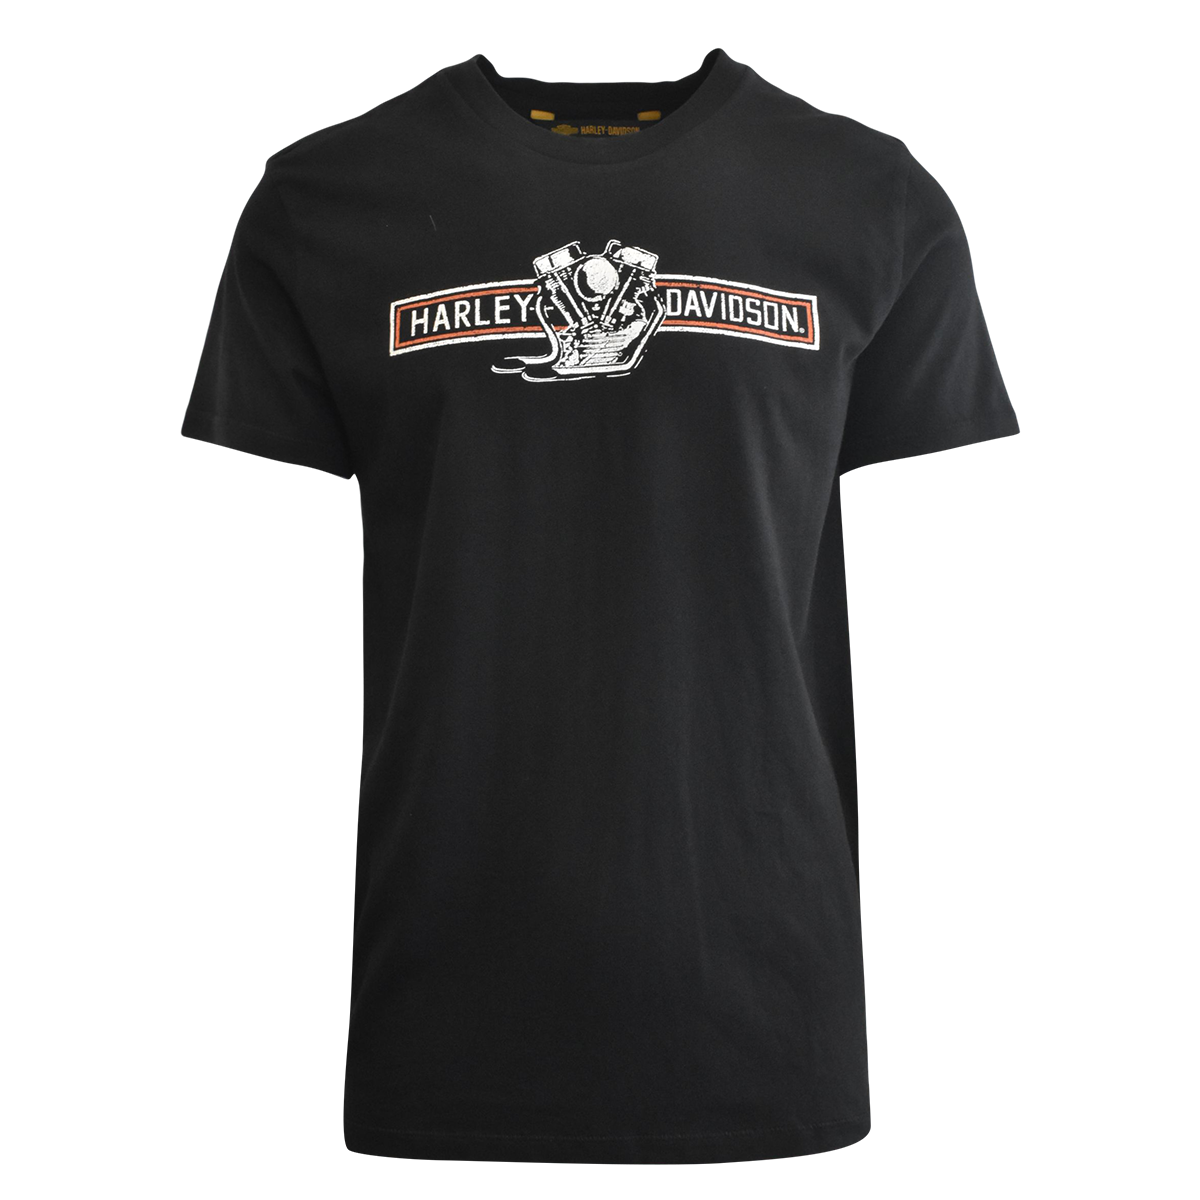 Harley-Davidson Men's T-Shirt Black Birdseye View Motorcycle Graphic (S74)